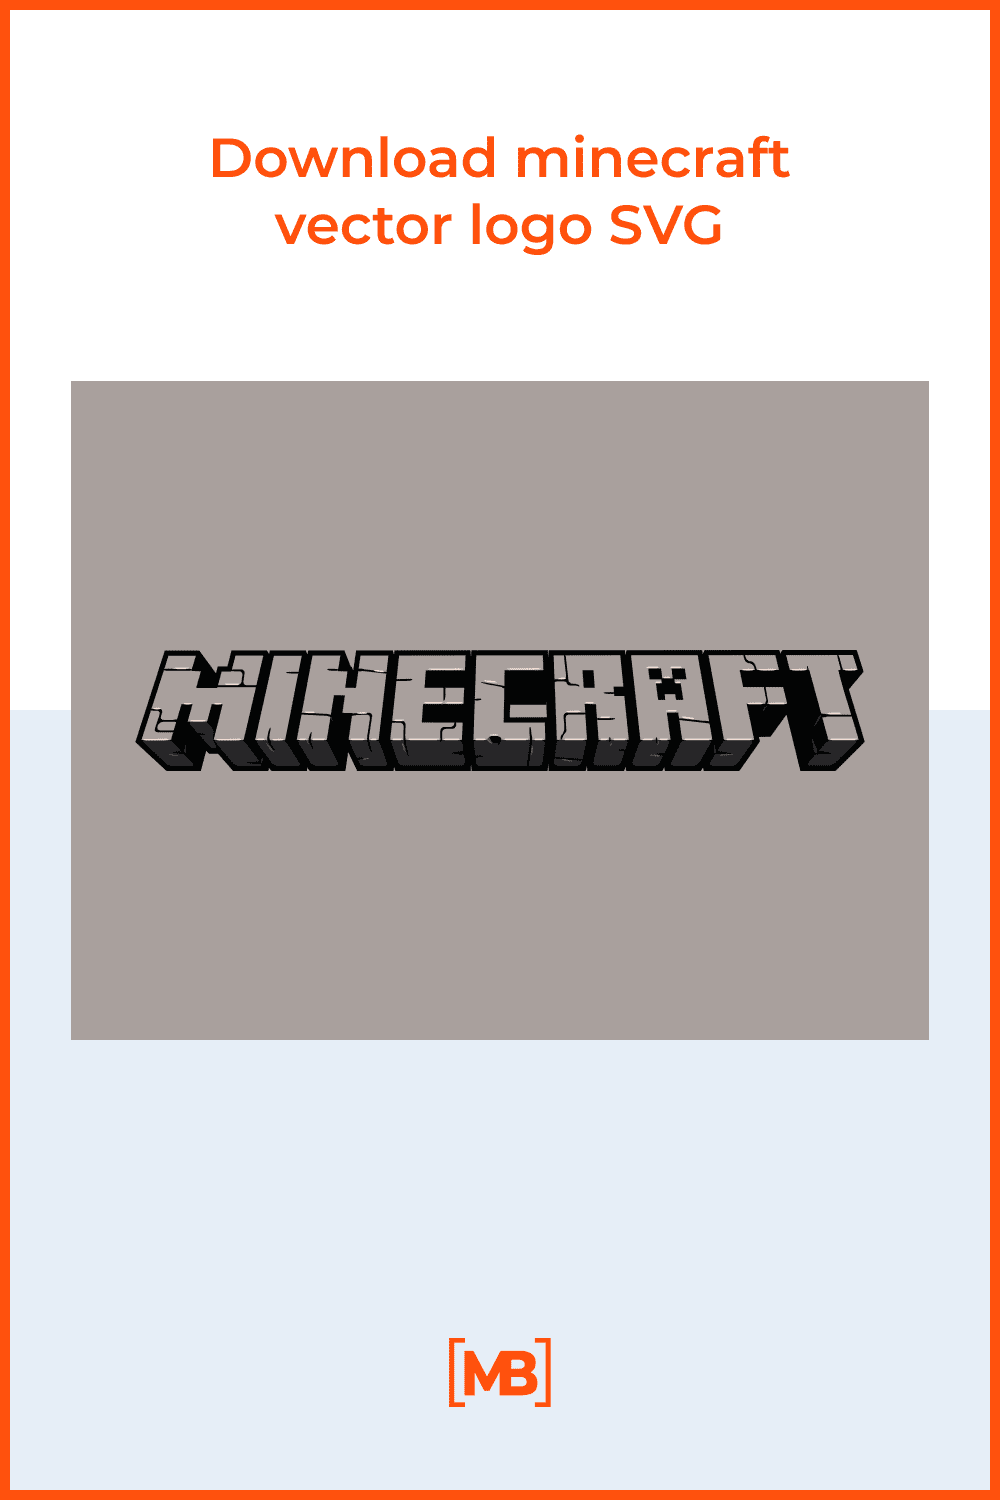 Download minecraft vector logo SVG.